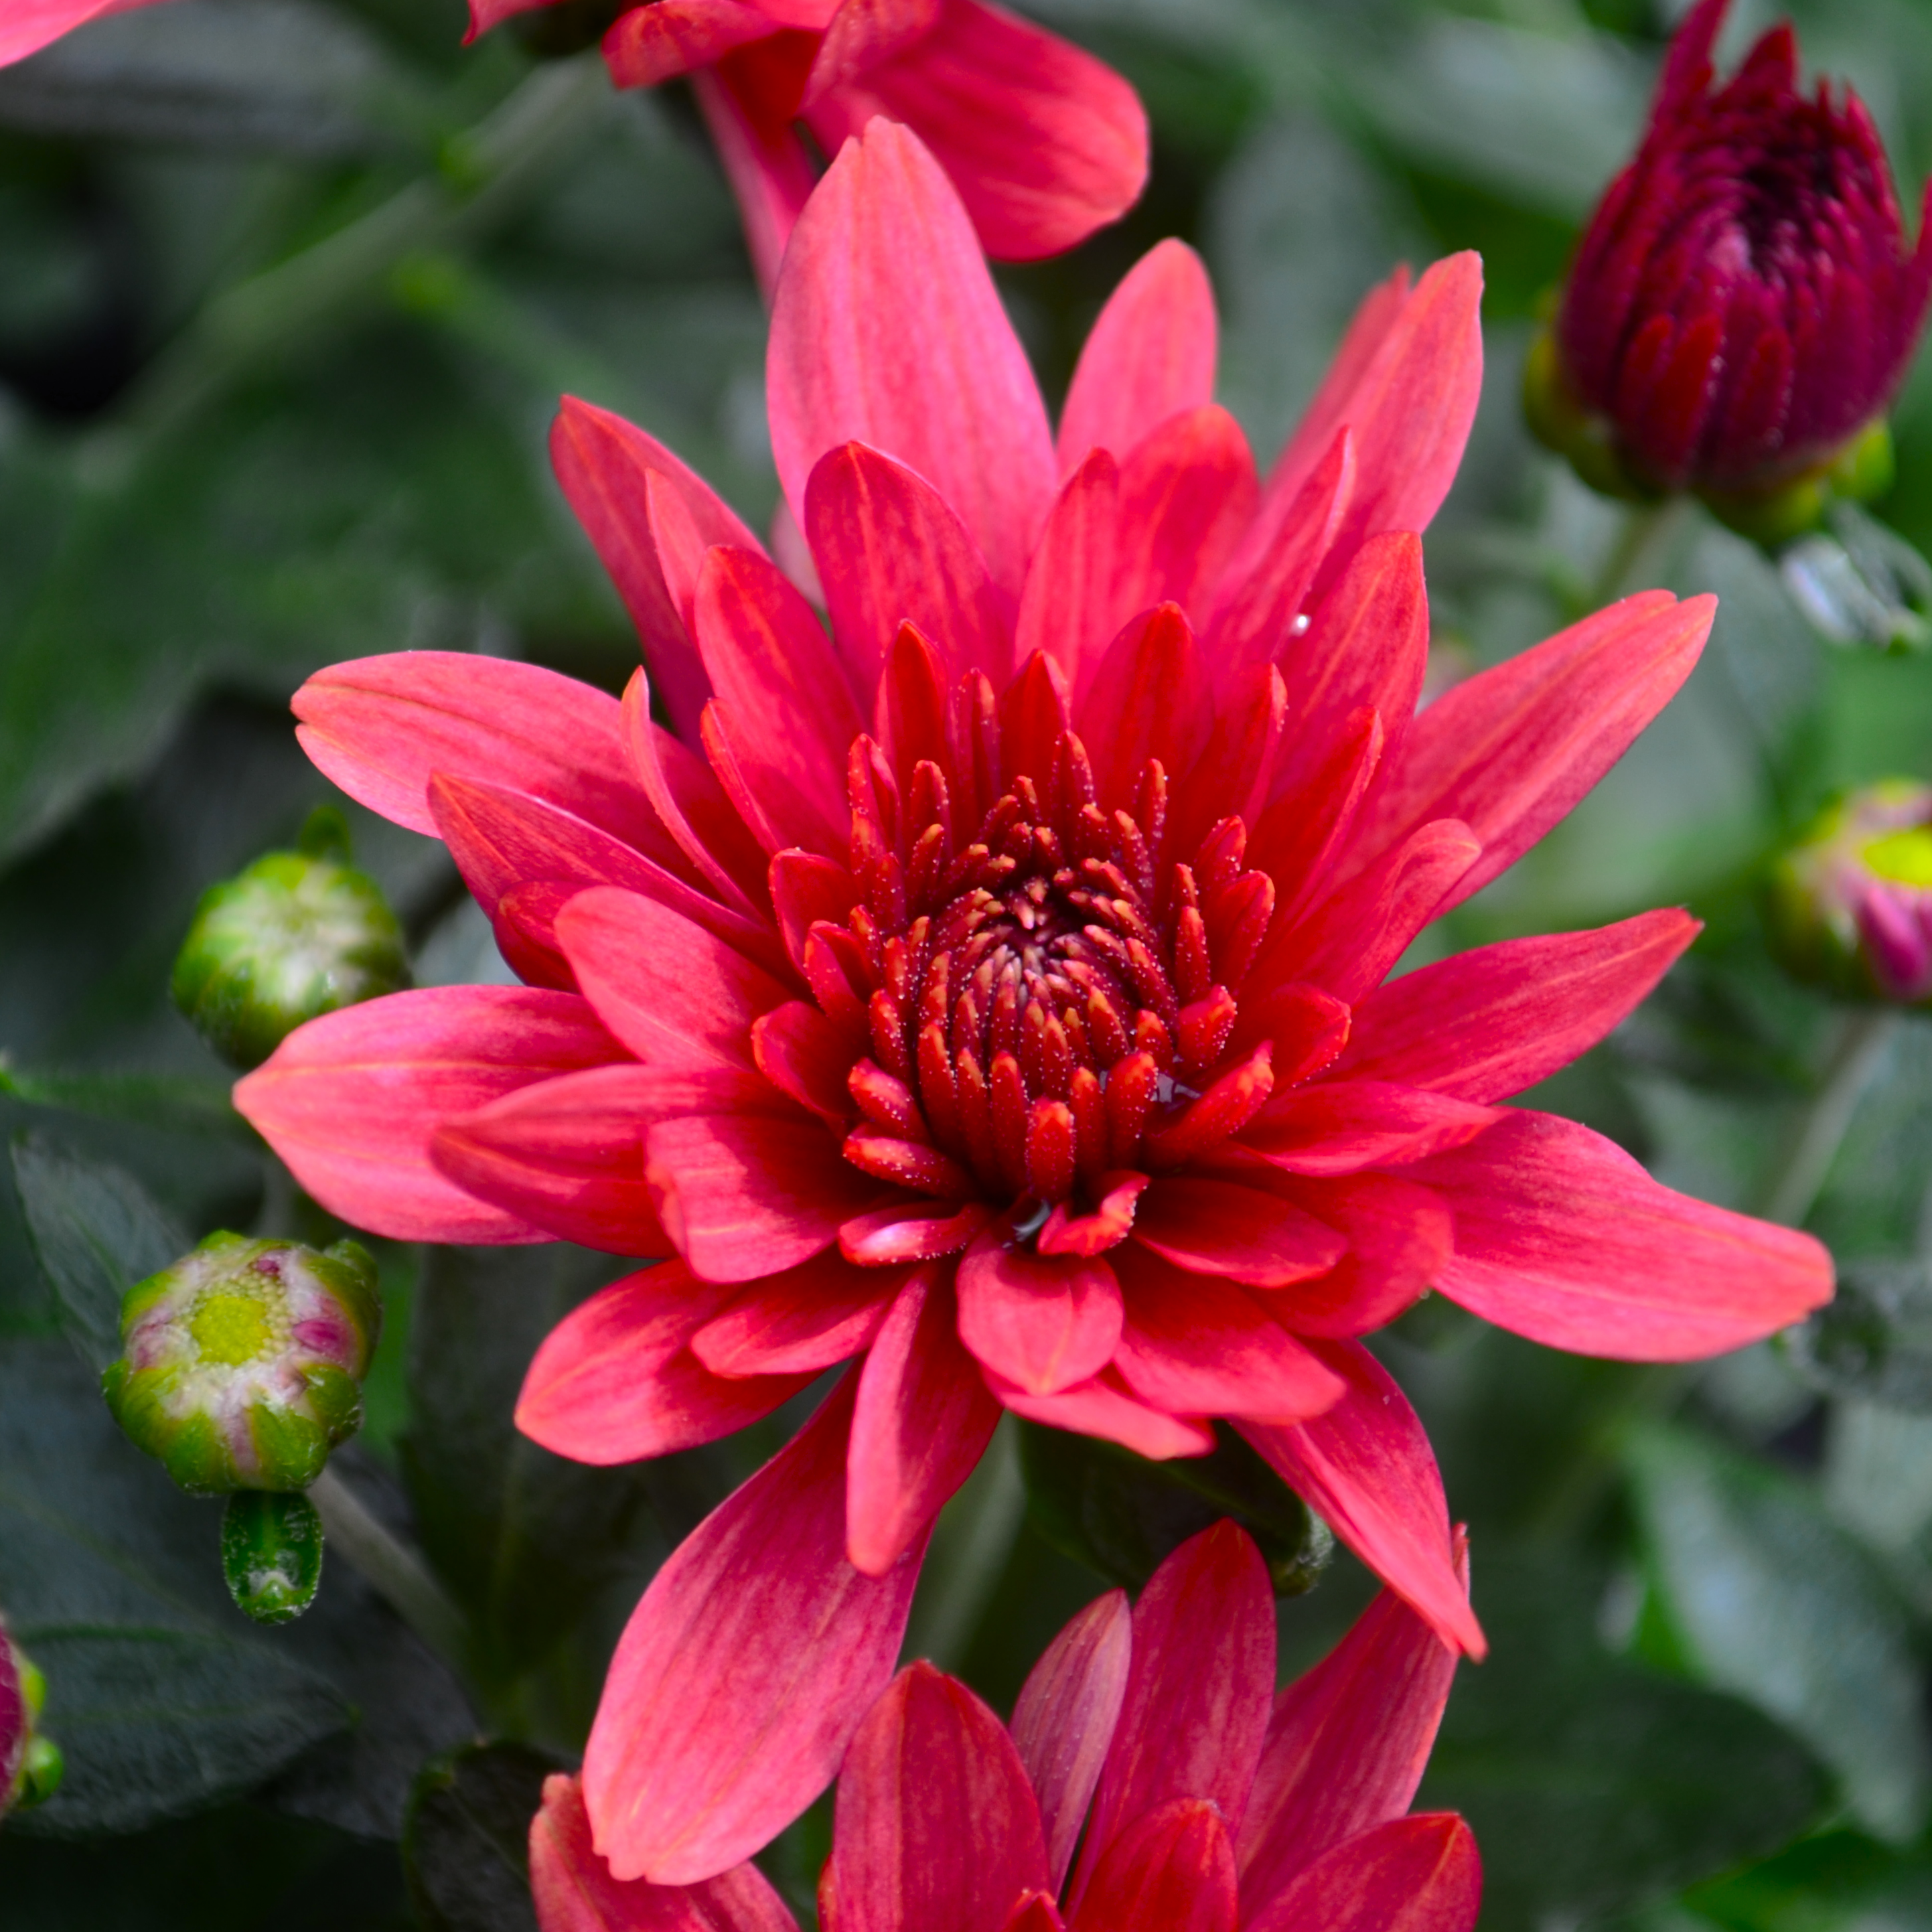 Chrysanthemum Fonti 'Red' - Mum from Hillcrest Nursery